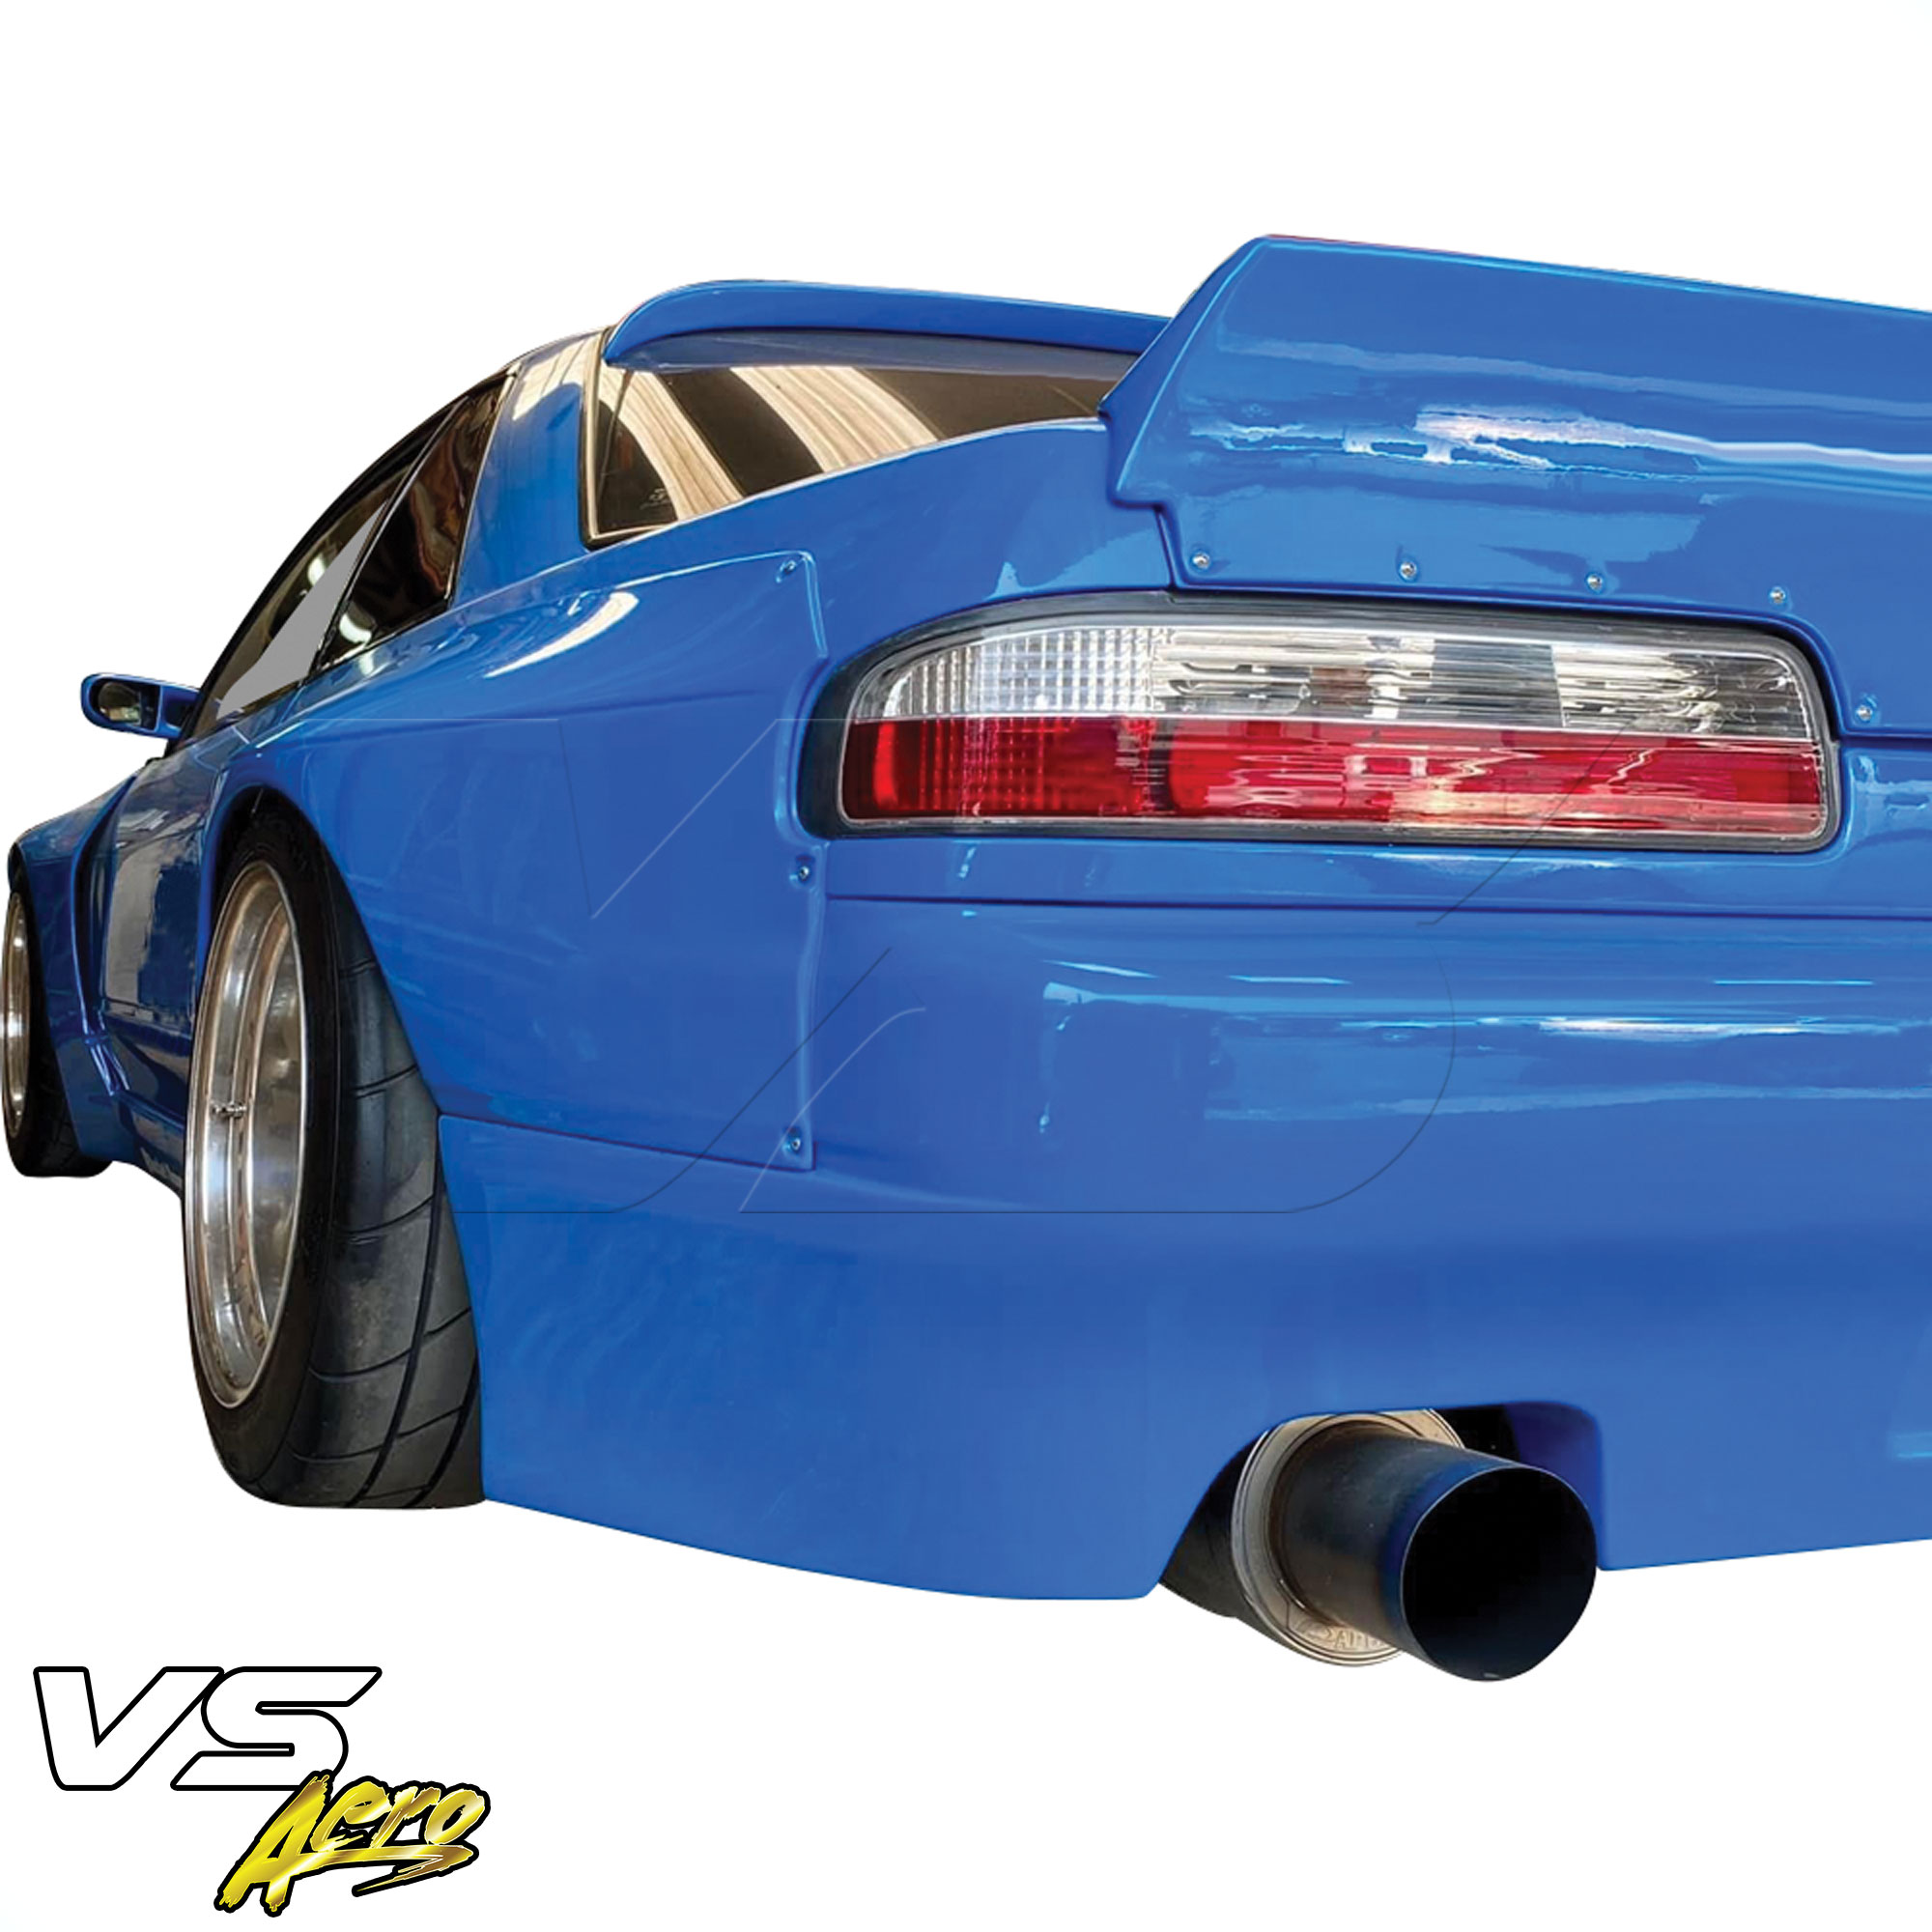 VSaero FRP TKYO v3 Wide Body 110mm Fenders (rear) > Nissan Silvia S13 1989-1994 > 2dr Coupe - Image 5